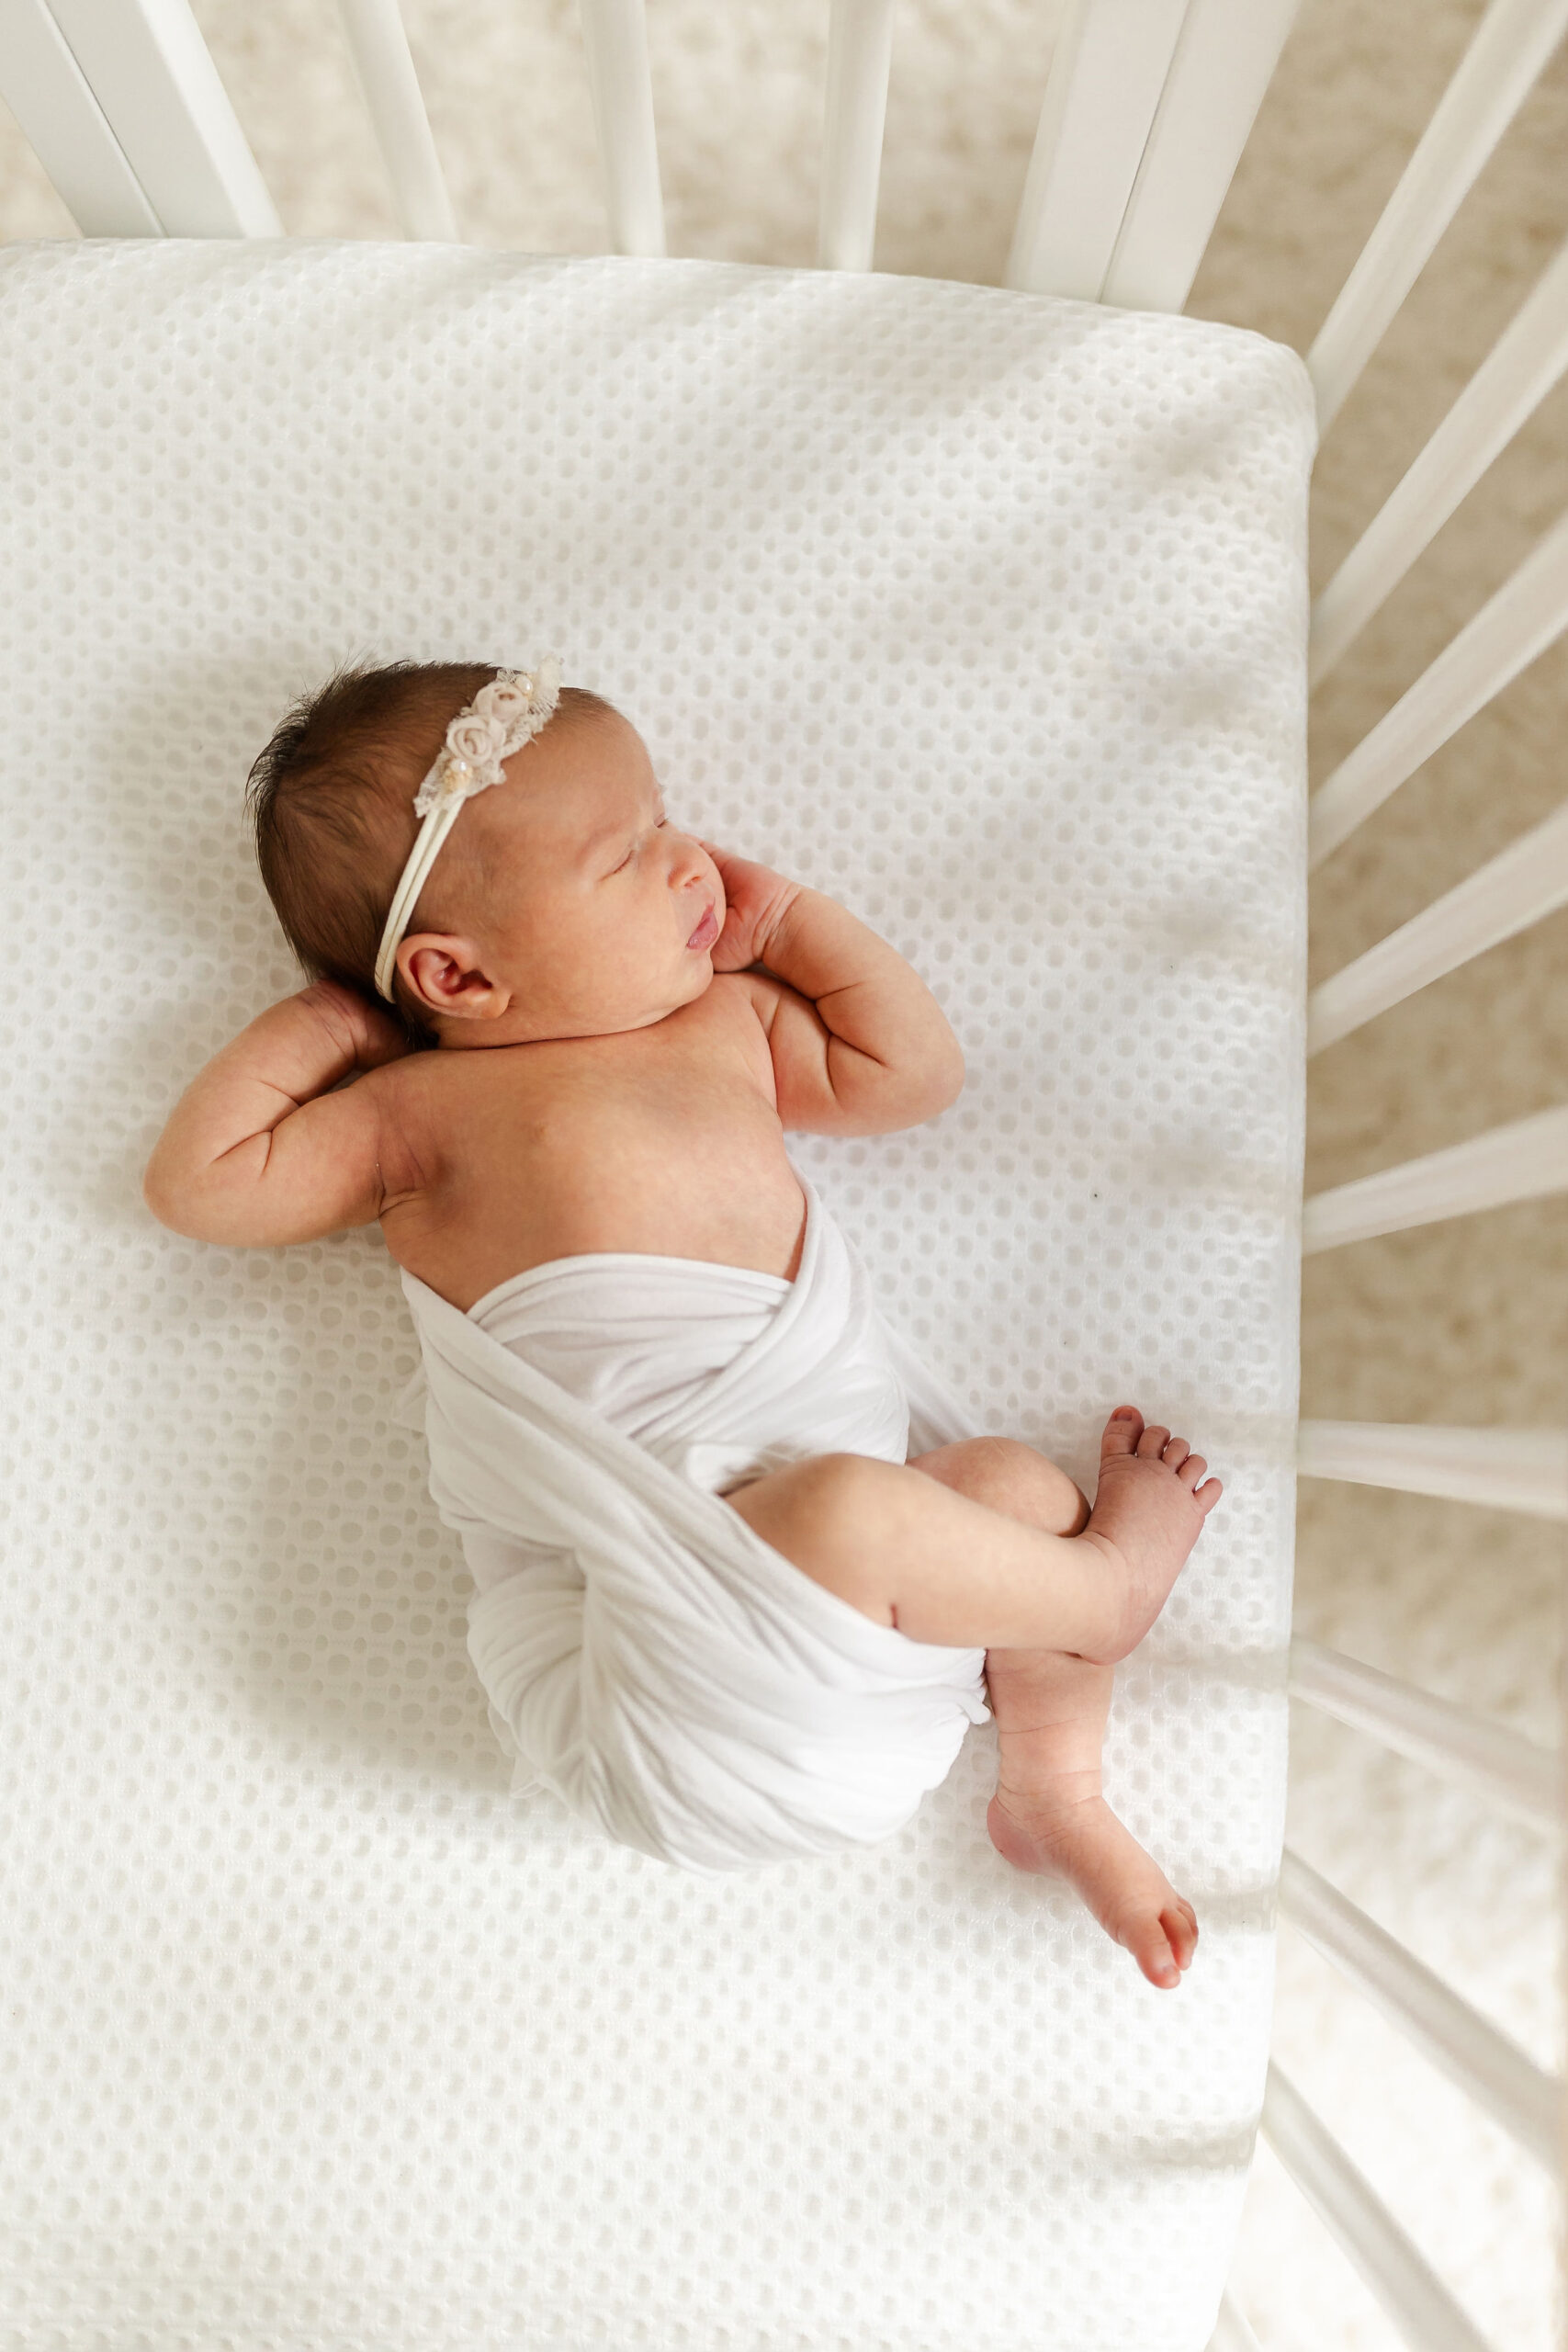 A newborn baby sleeps in a white wrap in a white crib